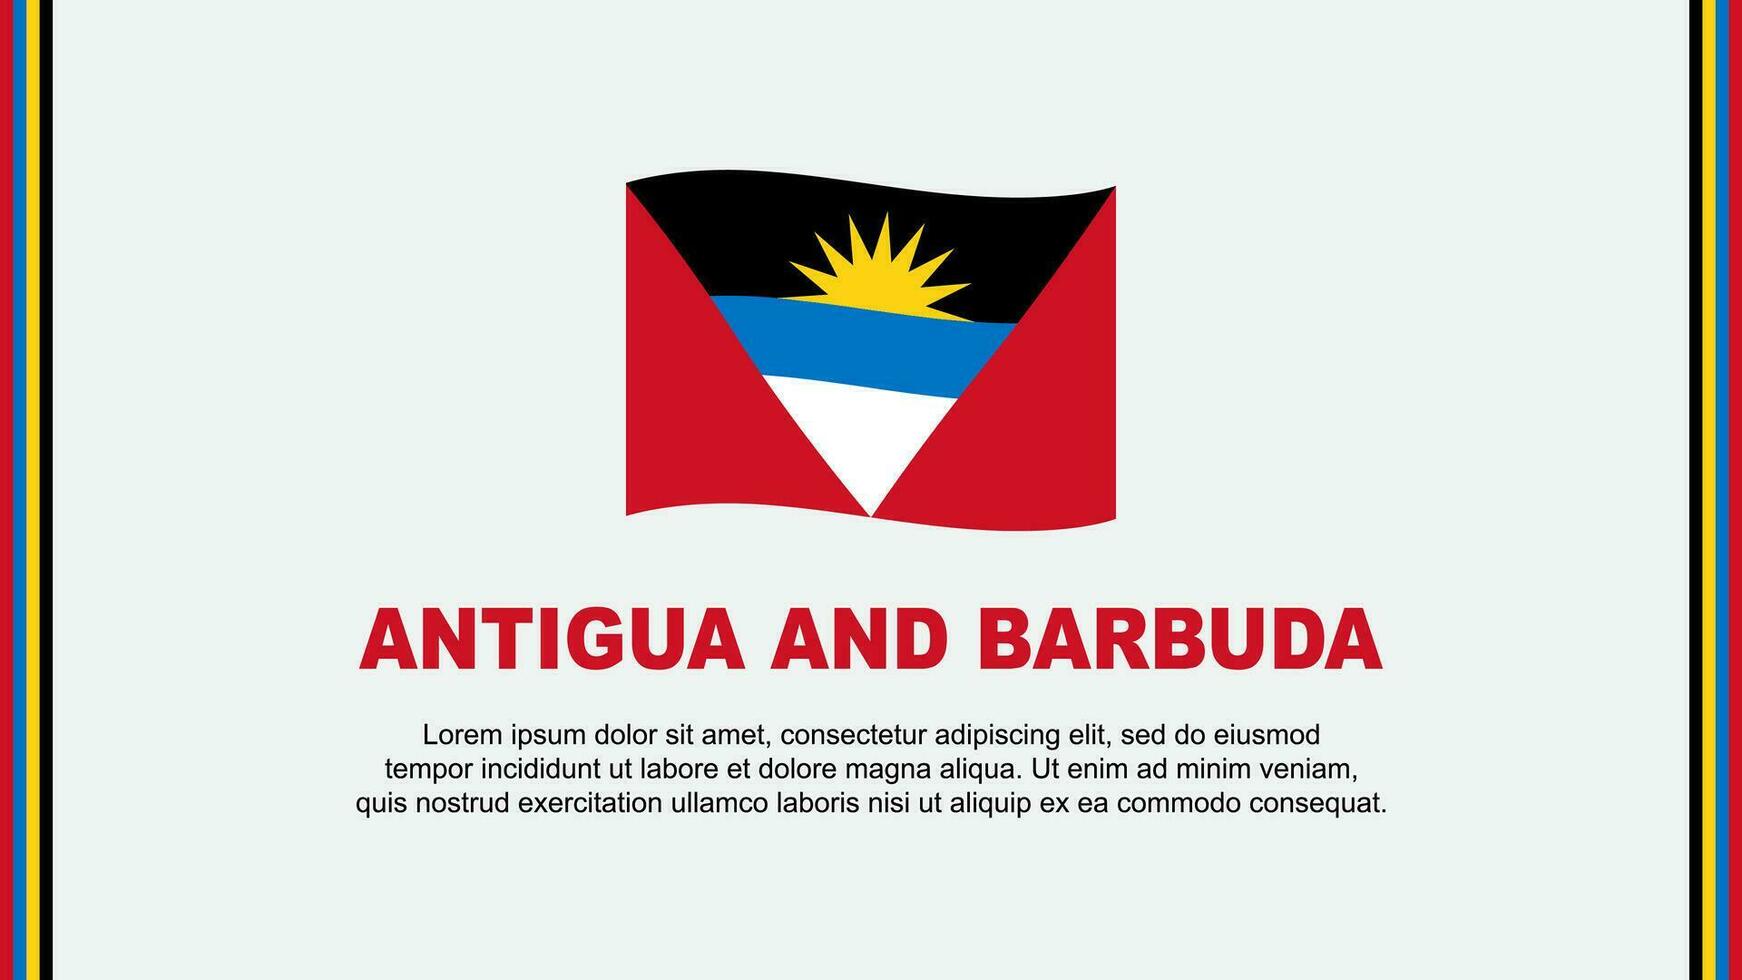 Antigua And Barbuda Flag Abstract Background Design Template. Antigua And Barbuda Independence Day Banner Social Media Vector Illustration. Antigua And Barbuda Cartoon